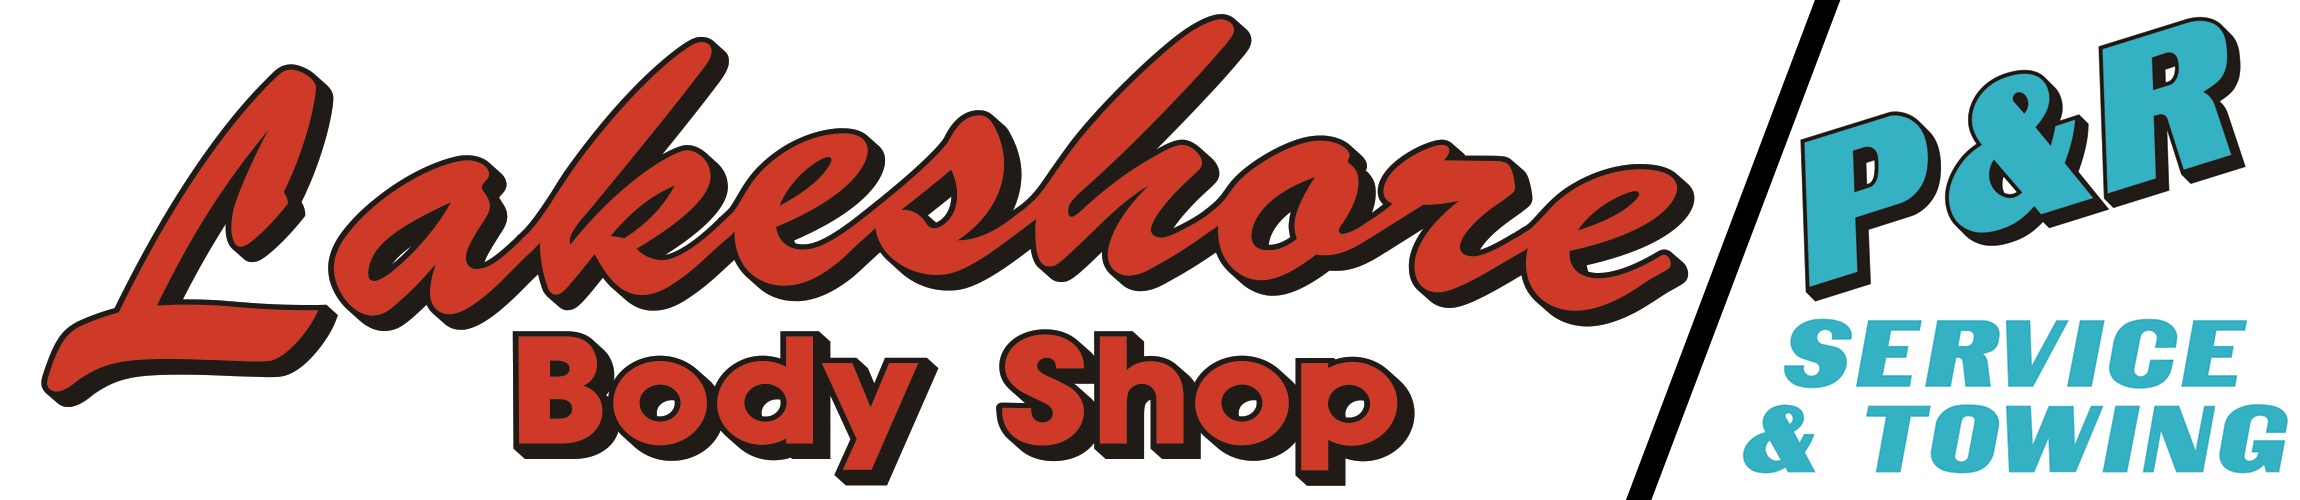 Lakeshore Body Shop | P&R Service & Towing